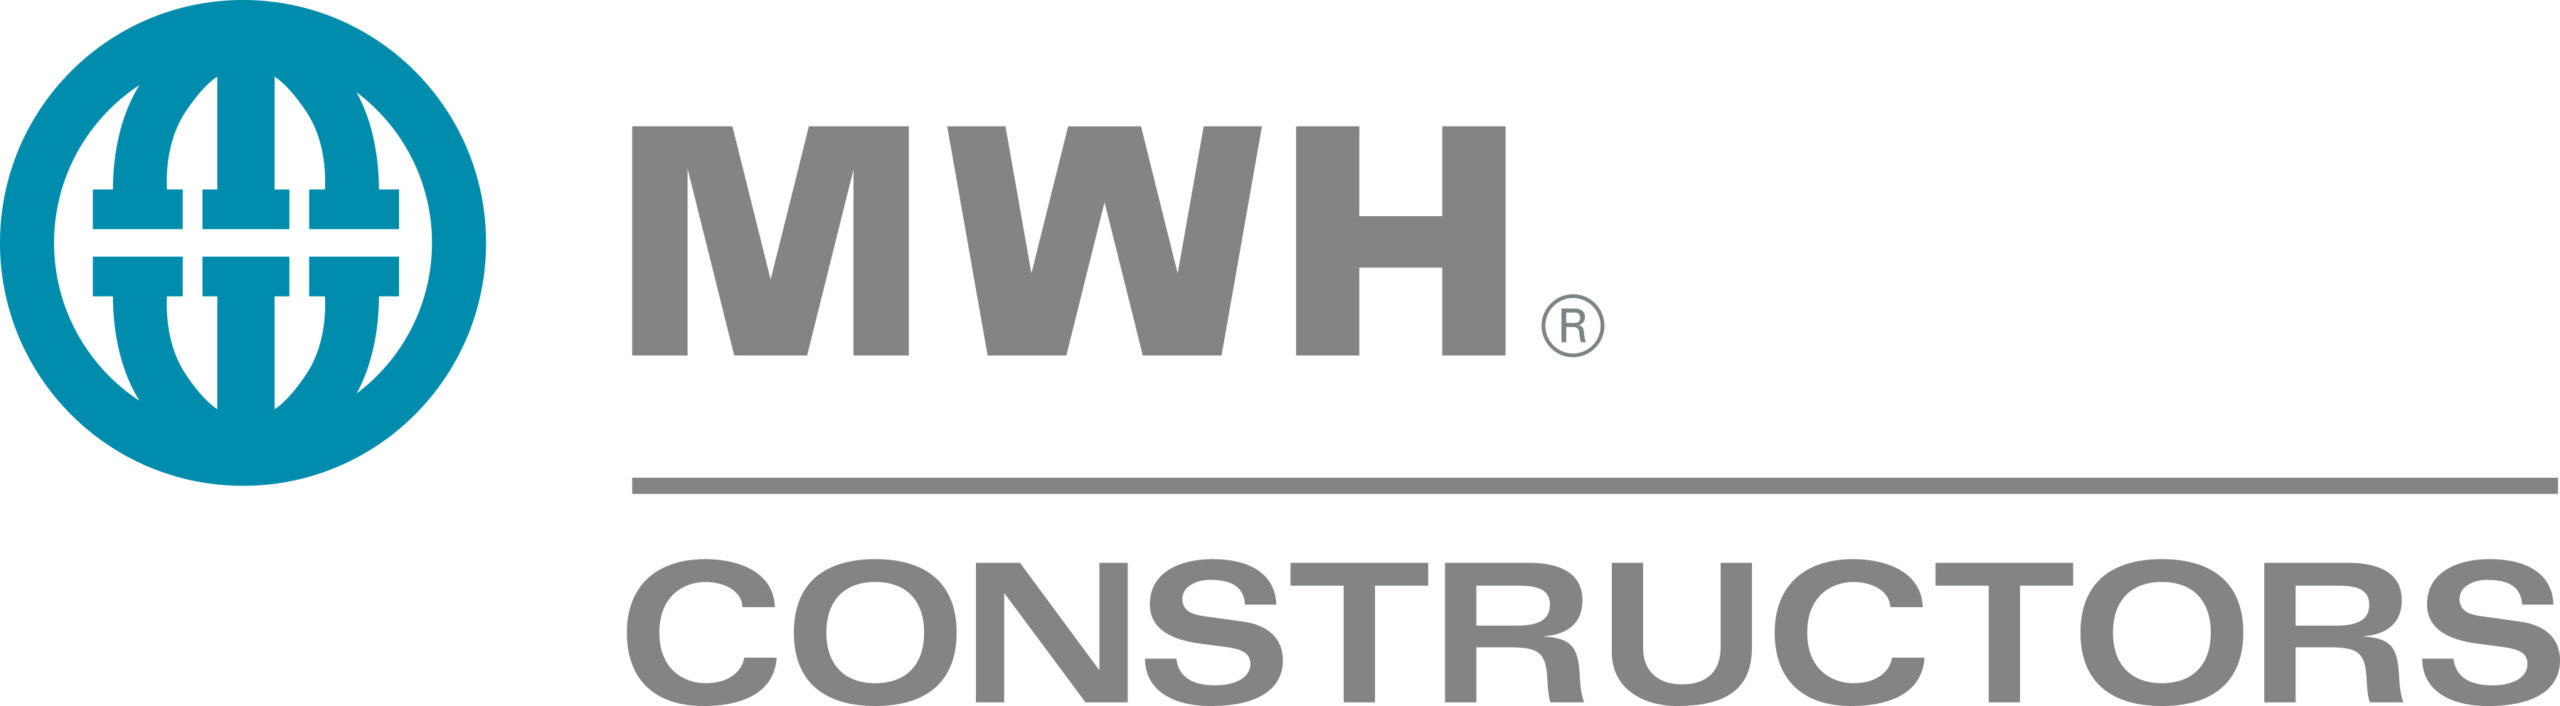 MWH Constructors